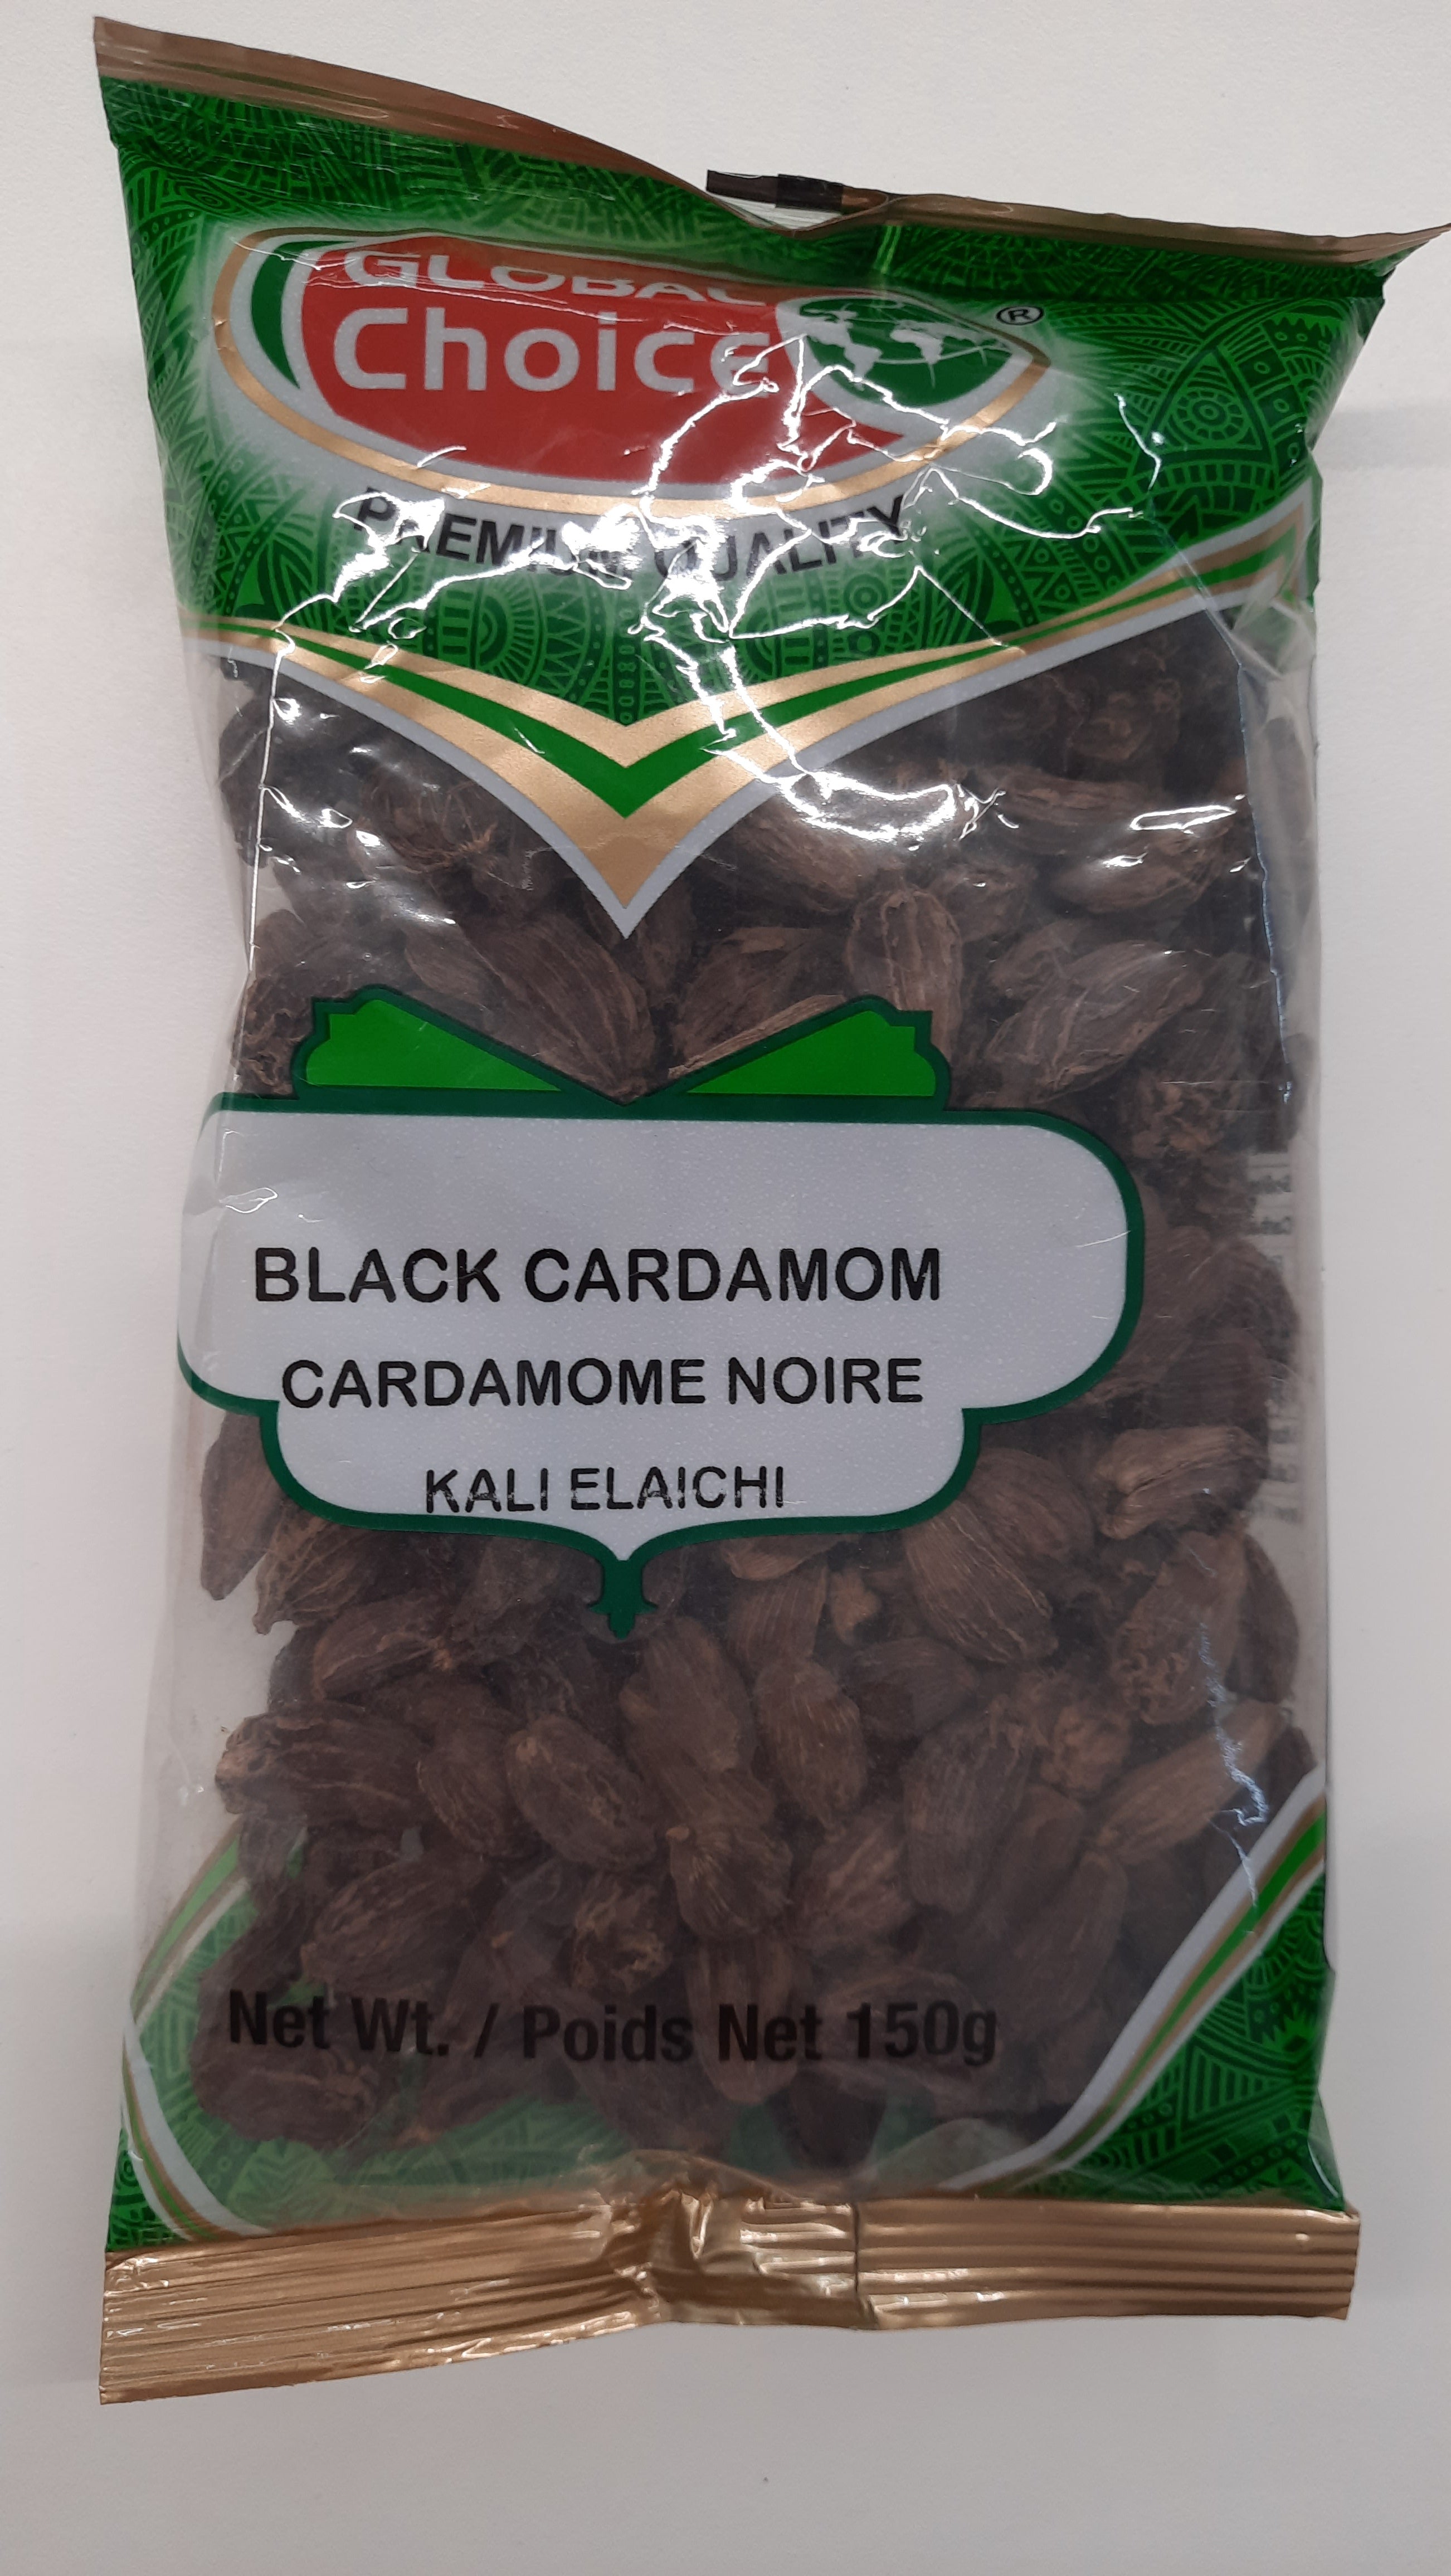 Global Choice - Black Cardamom 150g